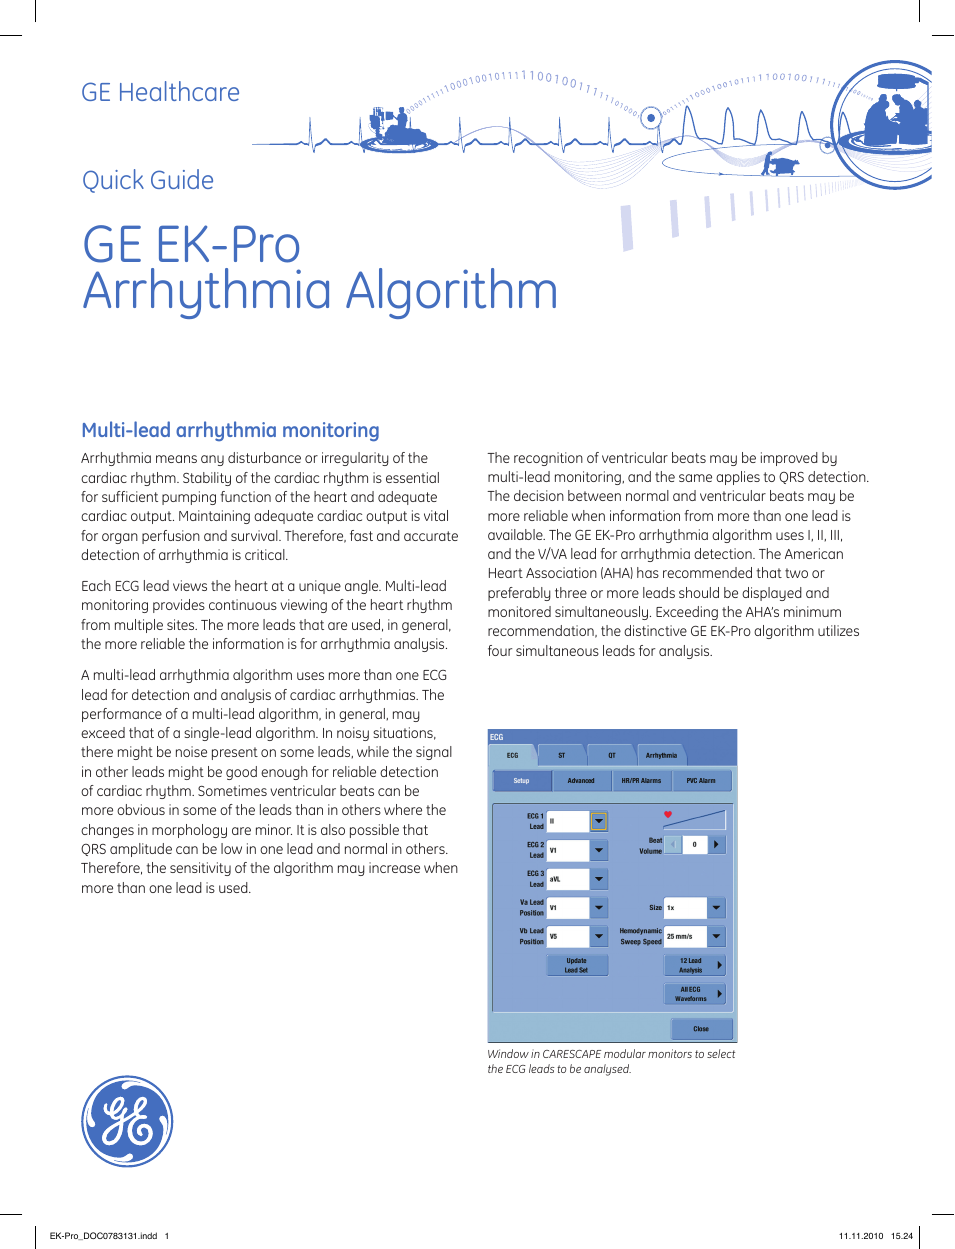 GE EK-Pro Arrhythmia Algorithm